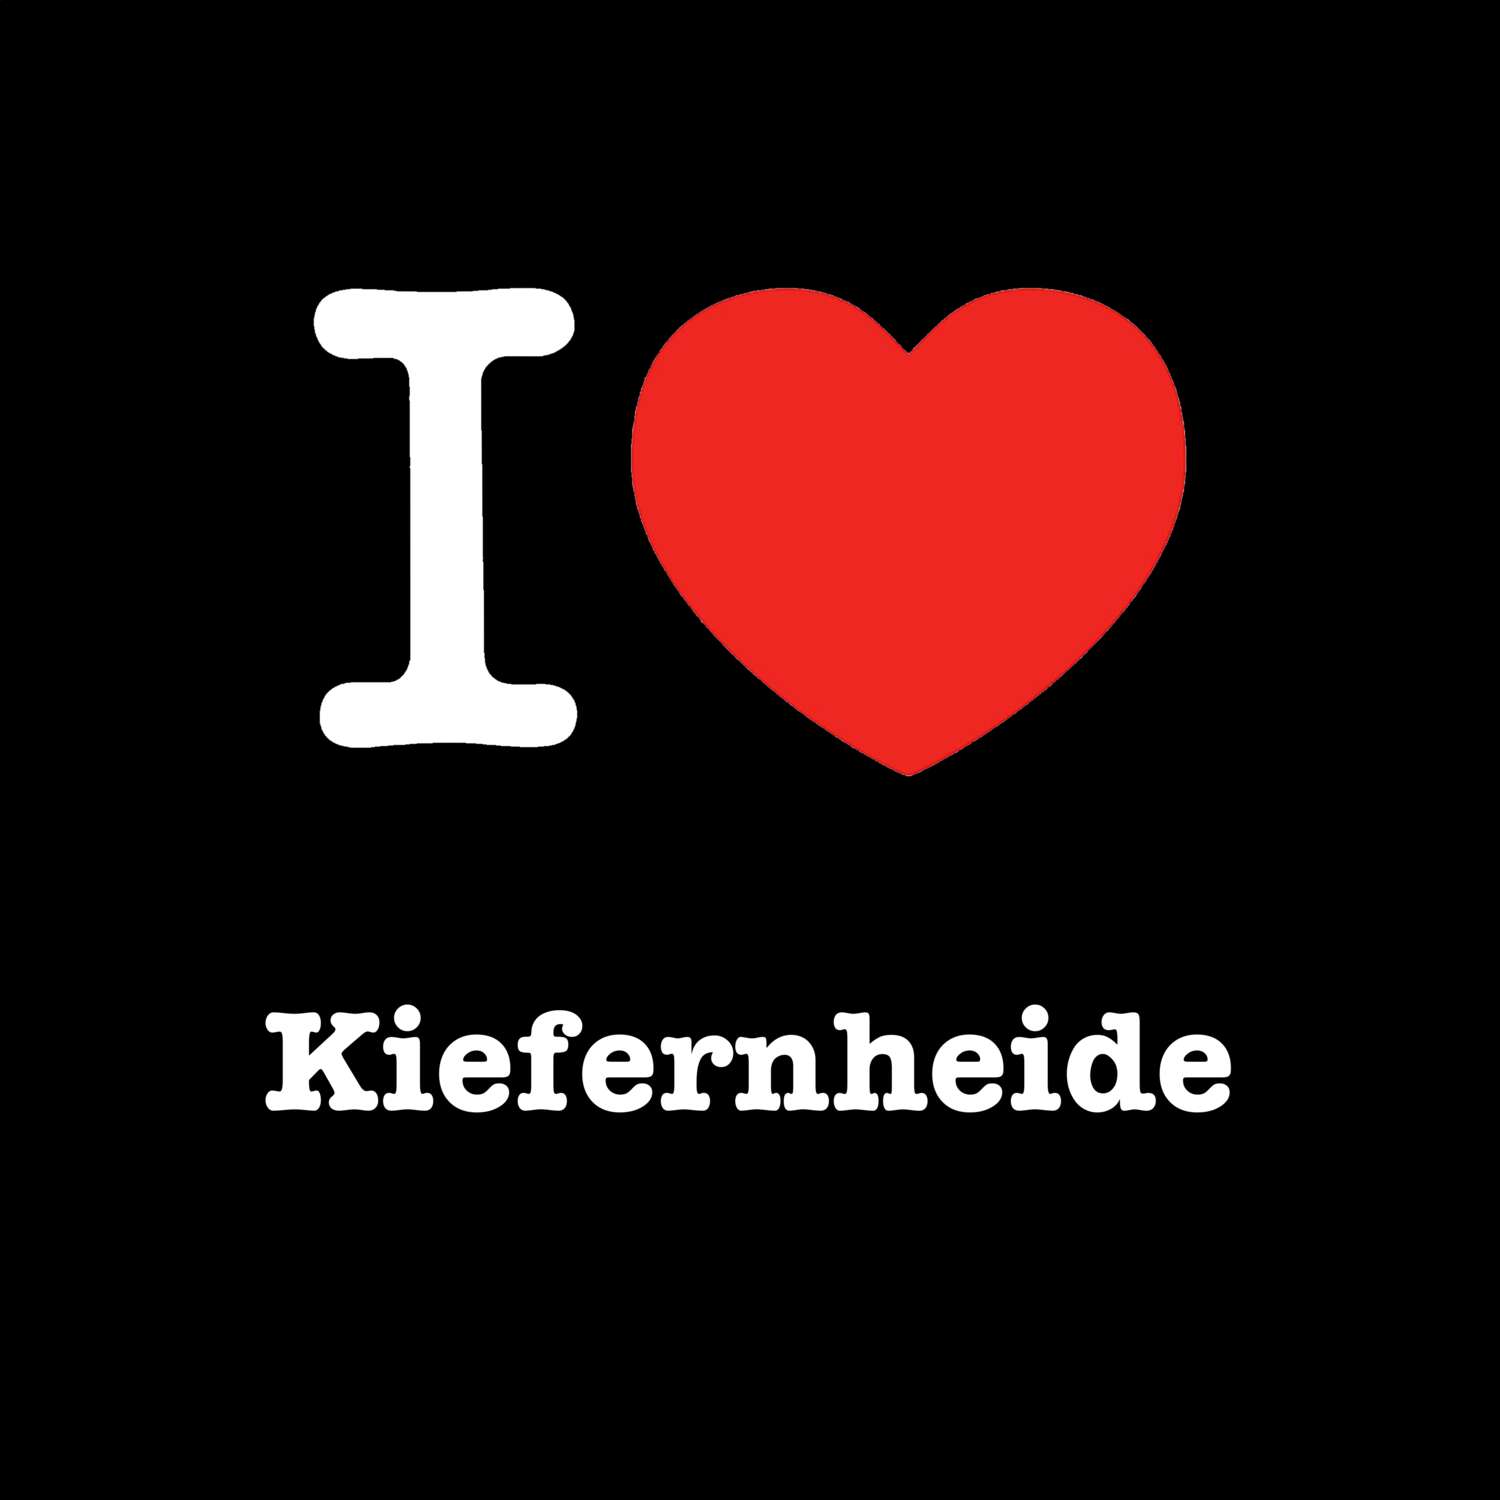 Kiefernheide T-Shirt »I love«